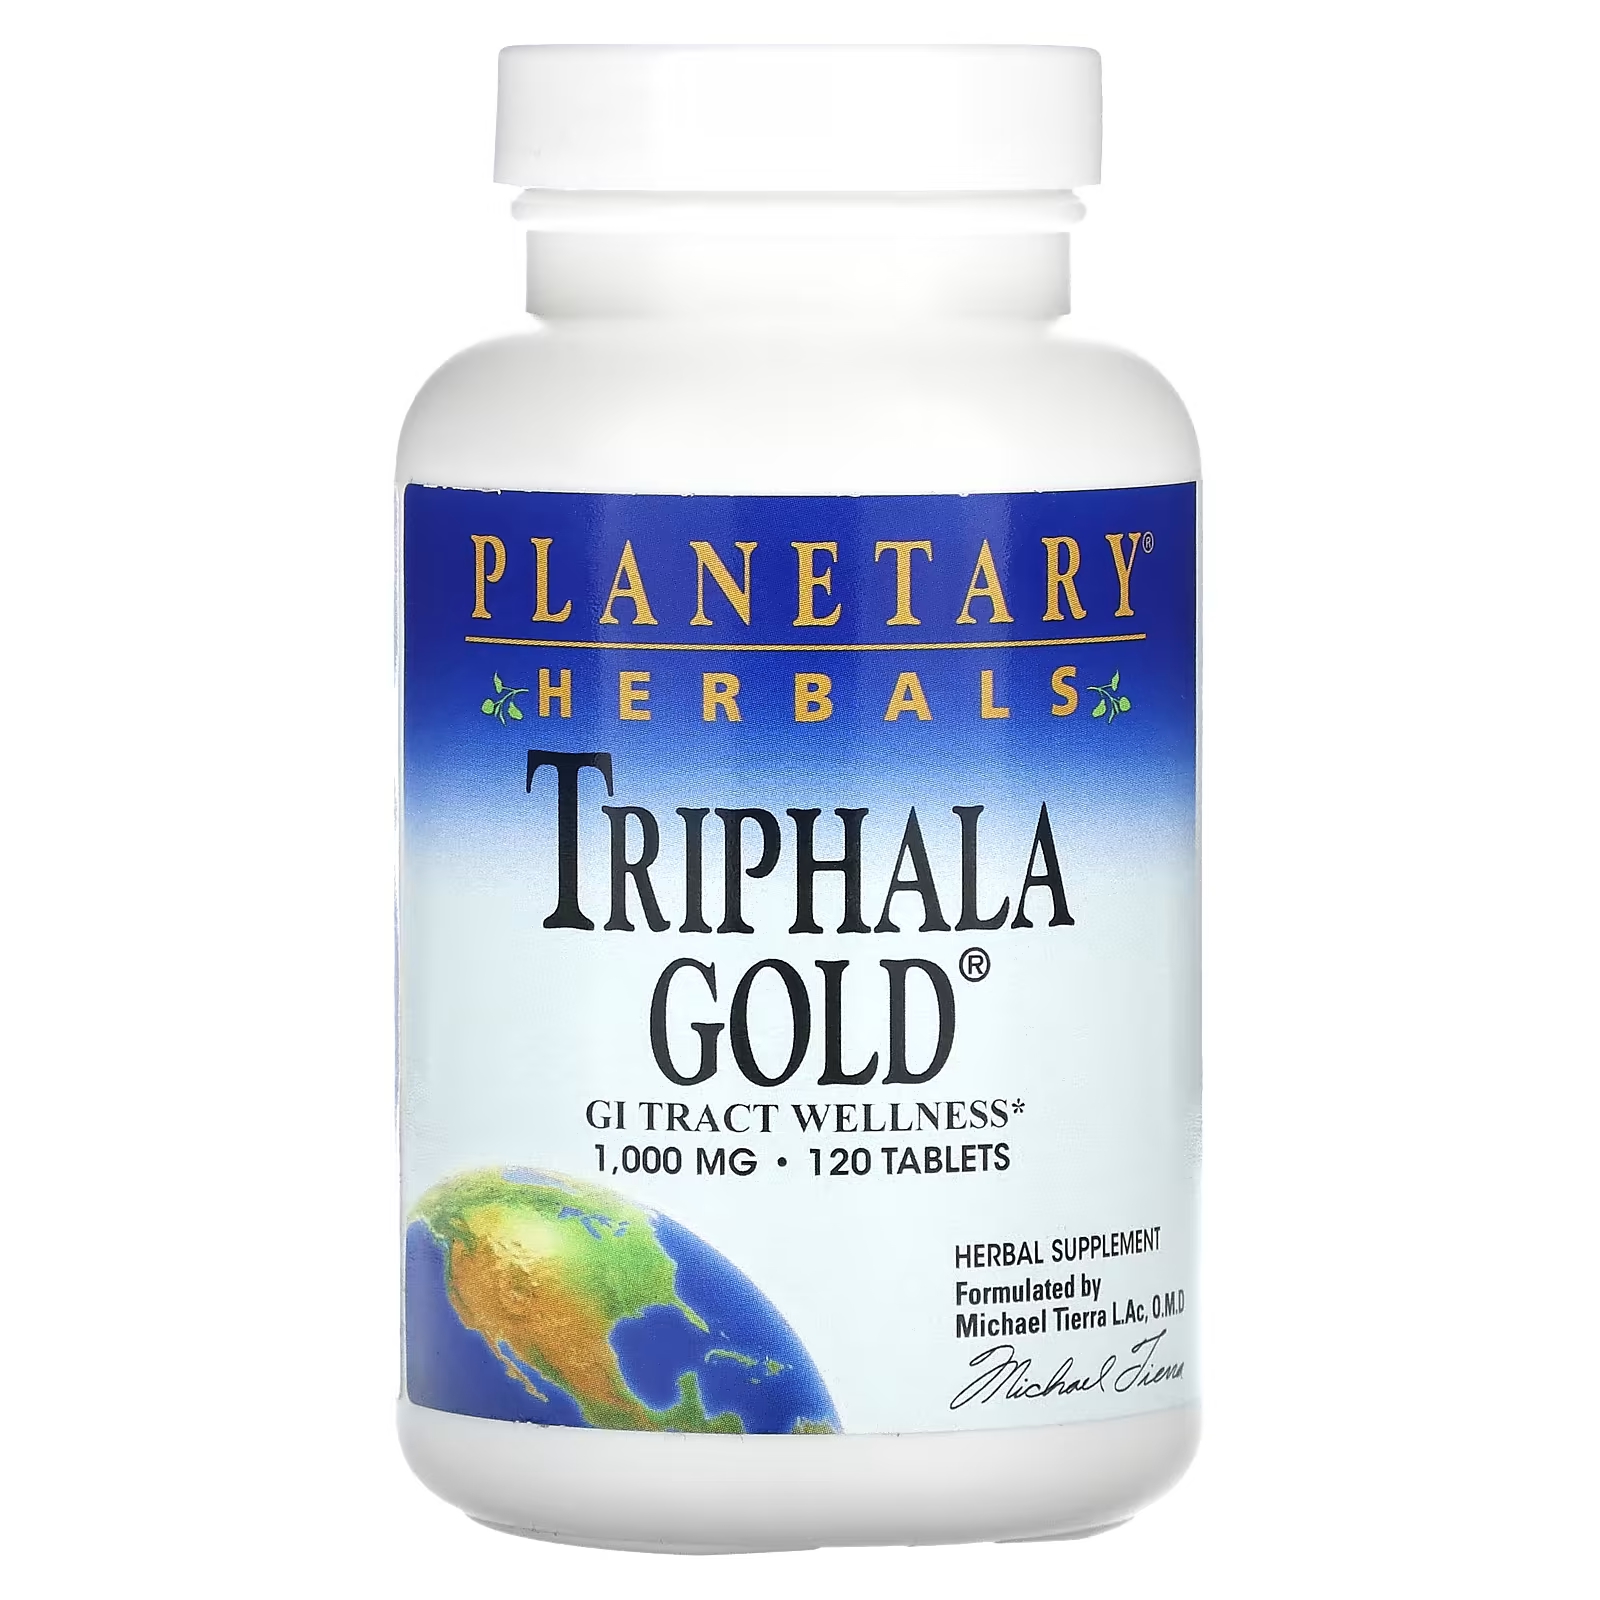 Planetary Herbals Трифала Голд 1000 мг 120 таблеток planetary herbals yin chiao classic 450 мг 120 таблеток